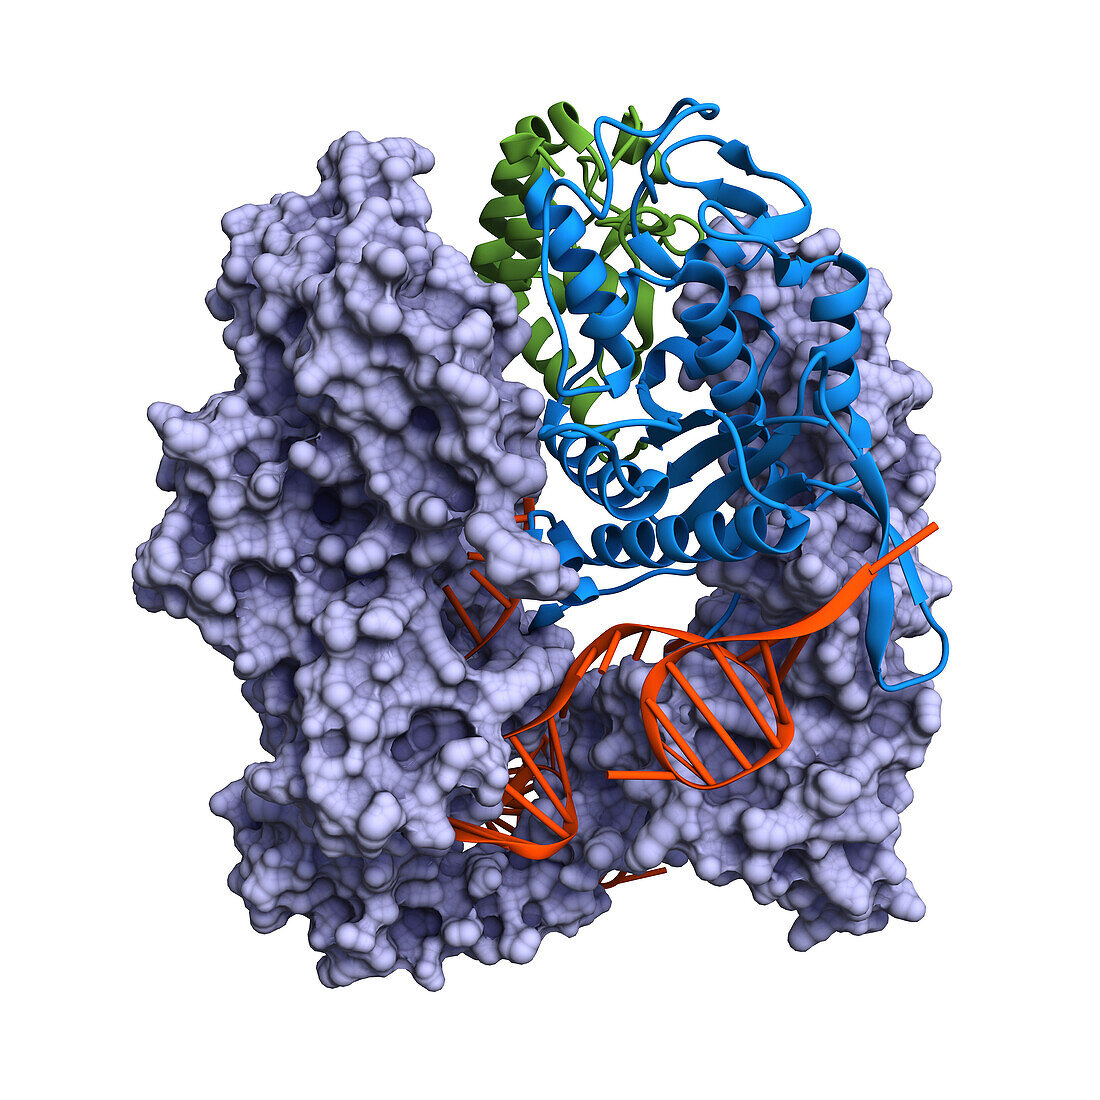 CRISPR Cas9 protein complexed with guide RNA, molecular model